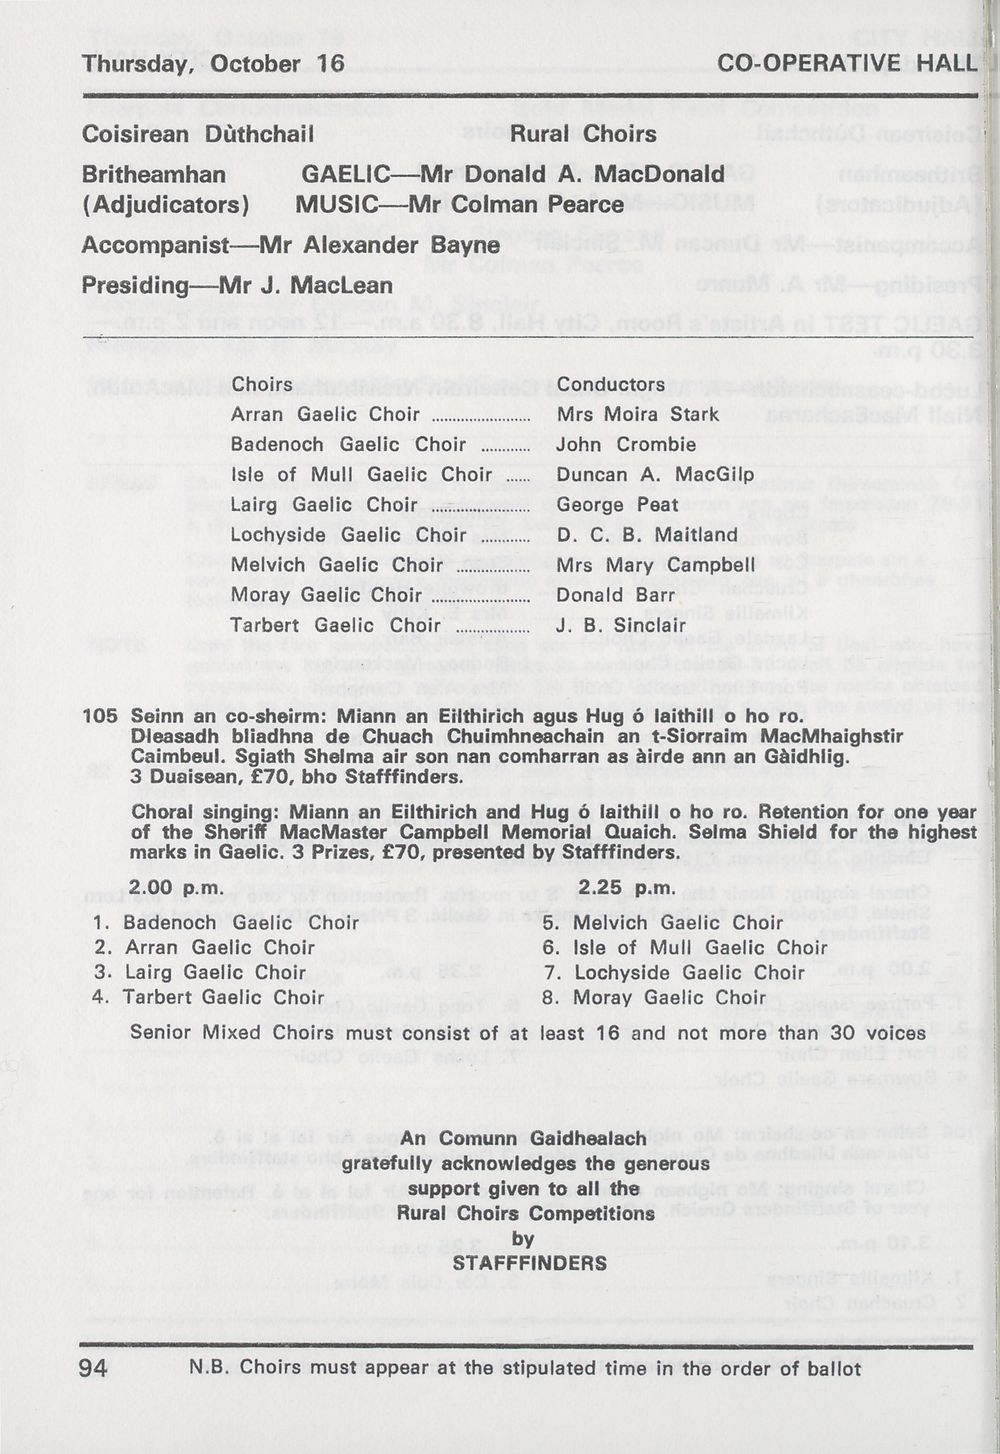 96 Royal National Mod Programmes And Fringe Events Royal National Mod Programmes Programme Of The Annual Mod 77th 1980 An Comunn Gaidhealach National Library Of Scotland